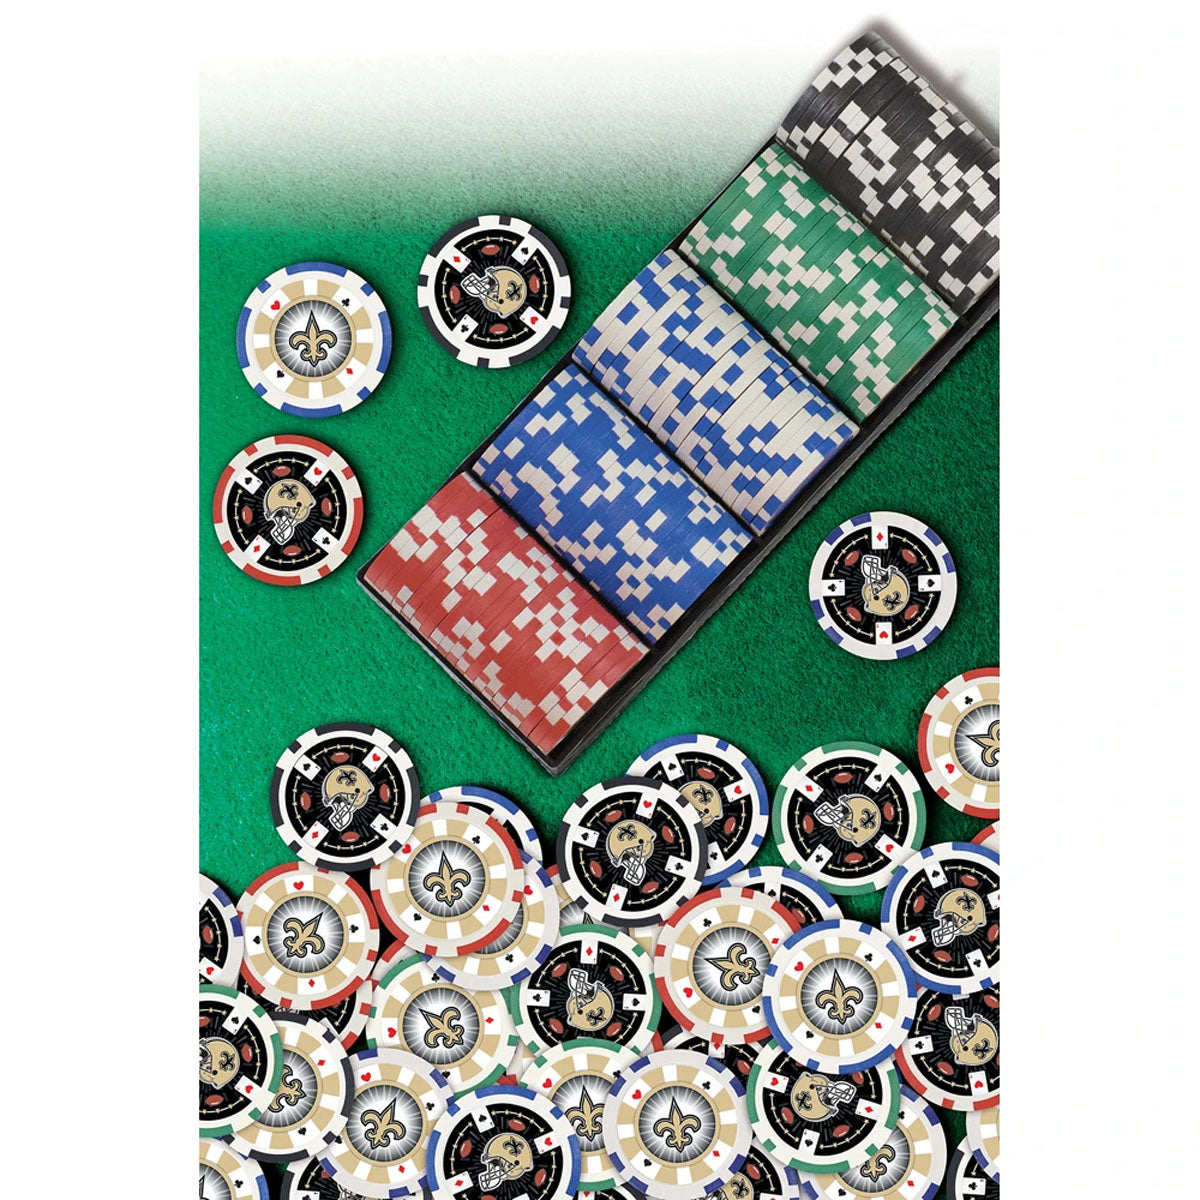 New Orleans Saints Poker Chips, 100 Chips